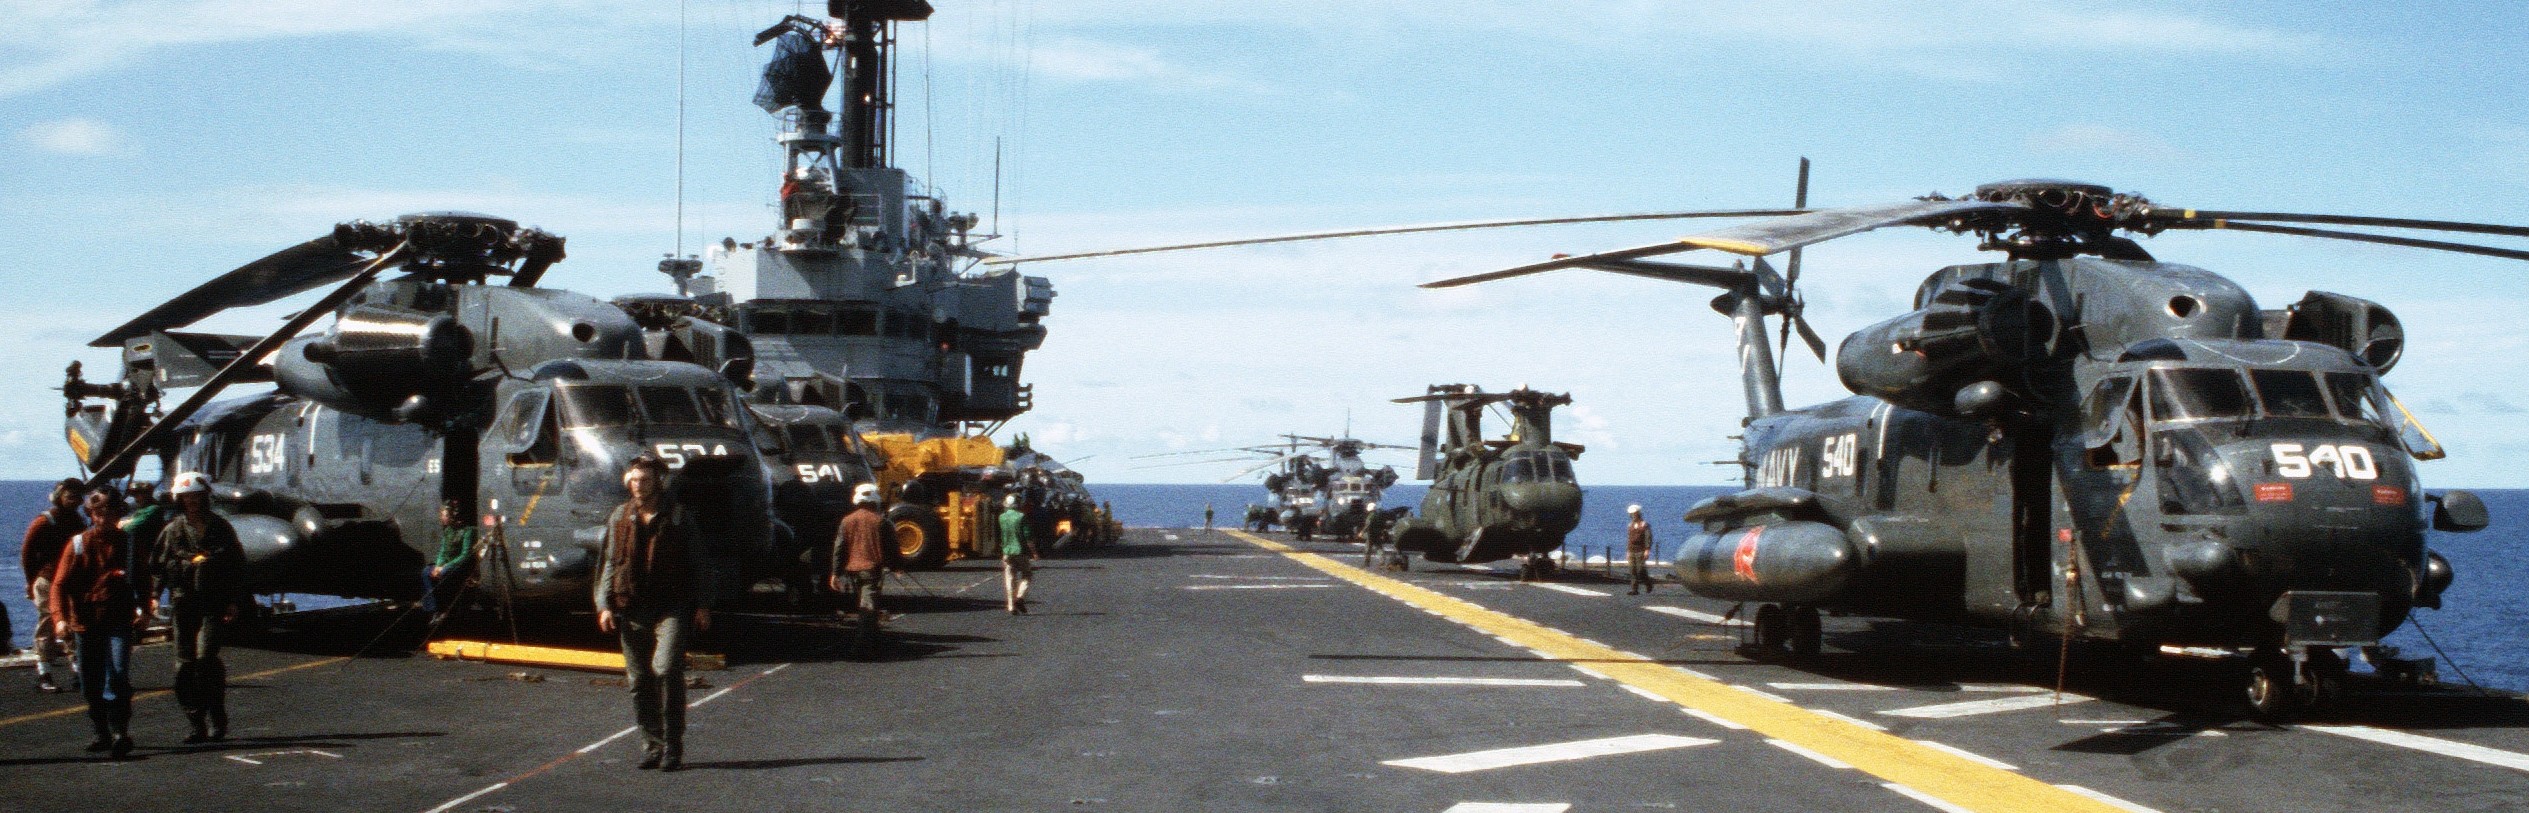 hm-14 vanguard helicopter mine countermeasures squadron navy rh-53d sea stallion 169 uss guadalcanal lph-7